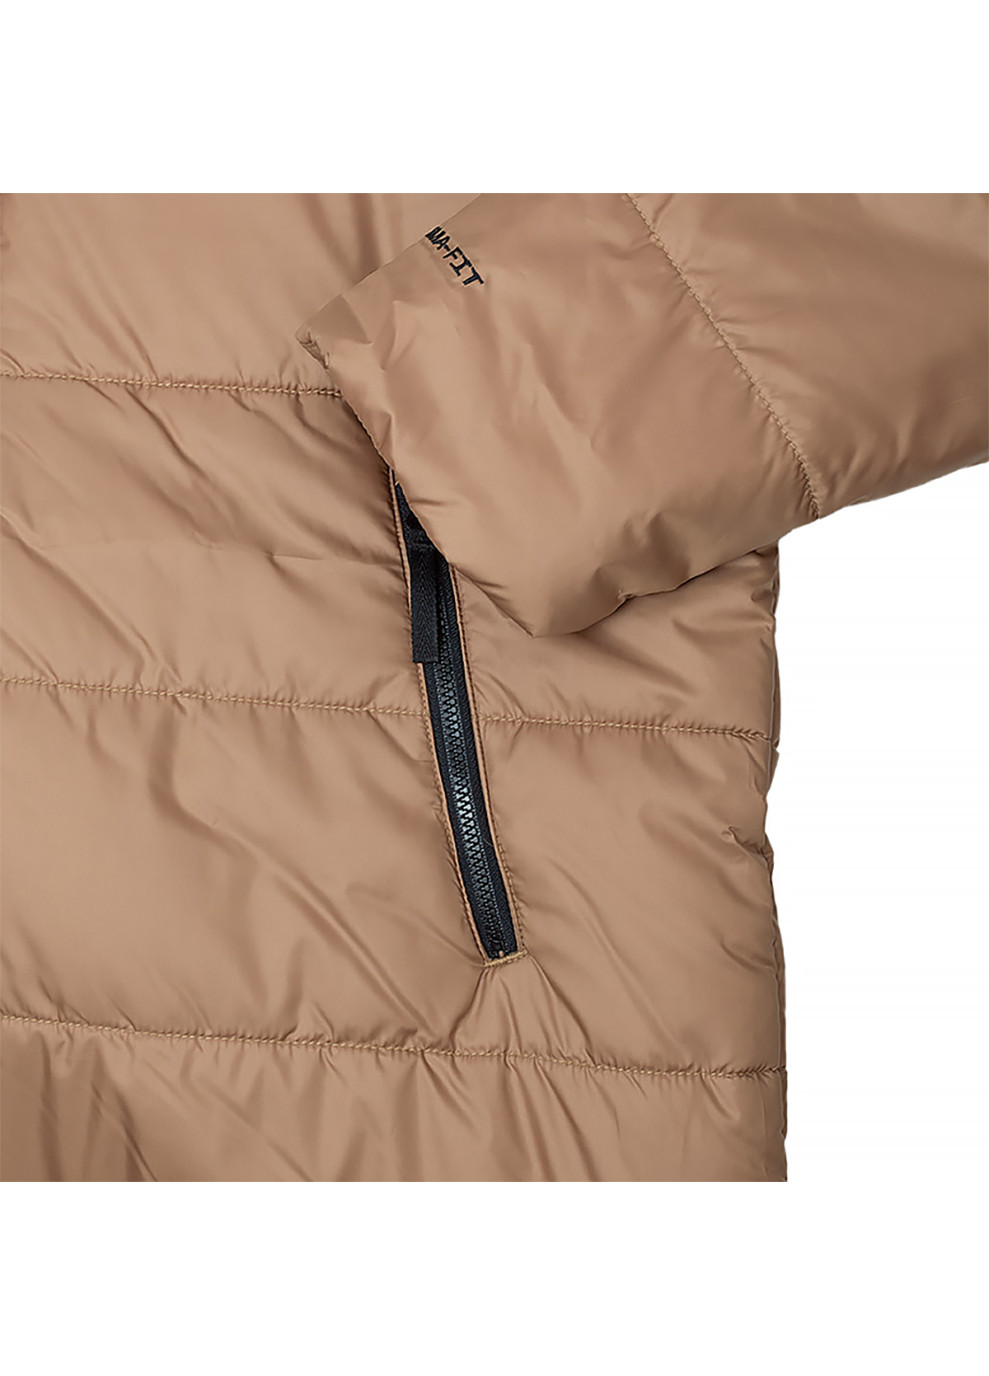 Коричневая зимняя женская куртка w nsw syn tf rpl hd parka su коричневый Nike